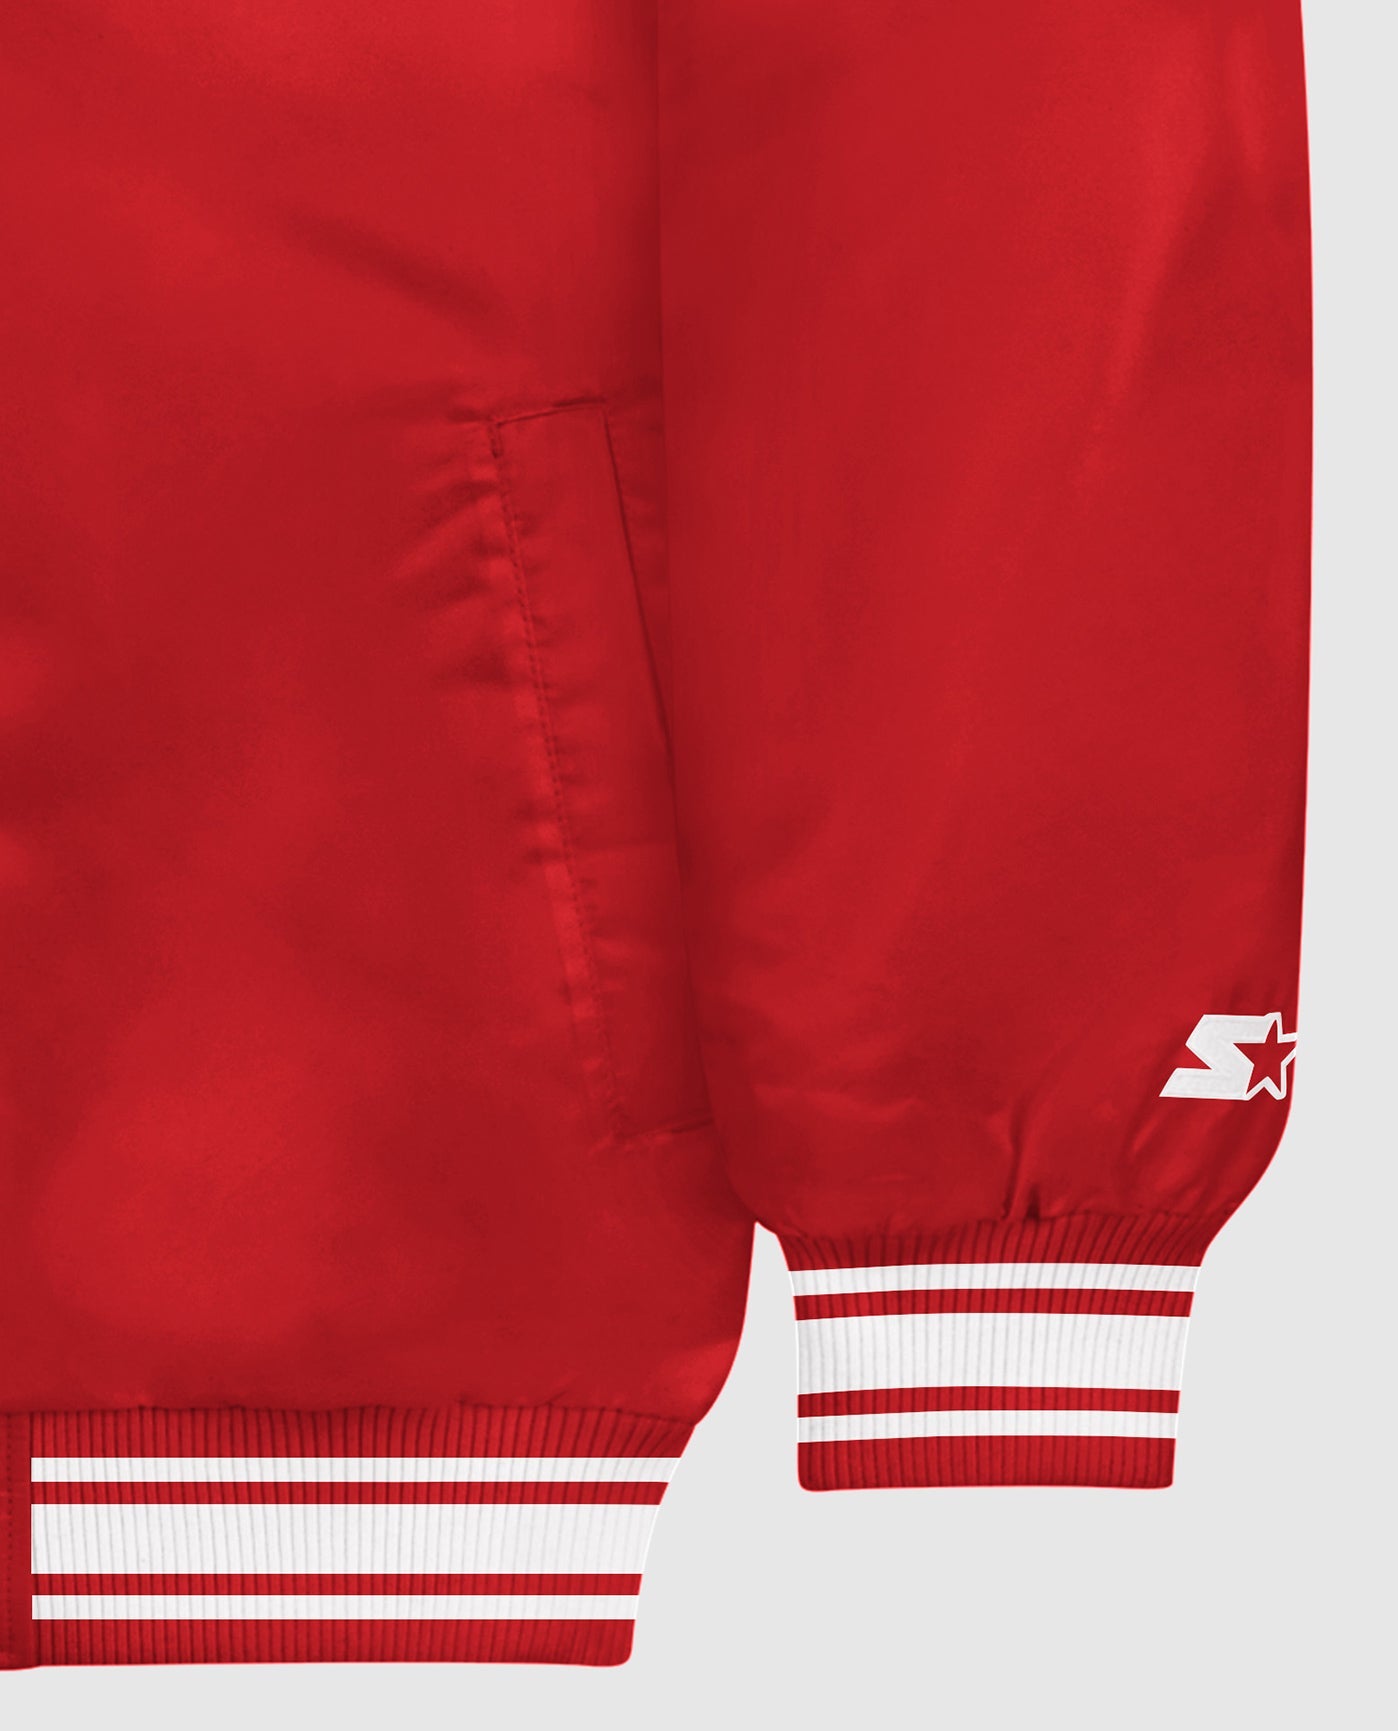 Men's Starter Red St. Louis Cardinals Pick & Roll Satin Varsity Full-Snap Jacket Size: Extra Large